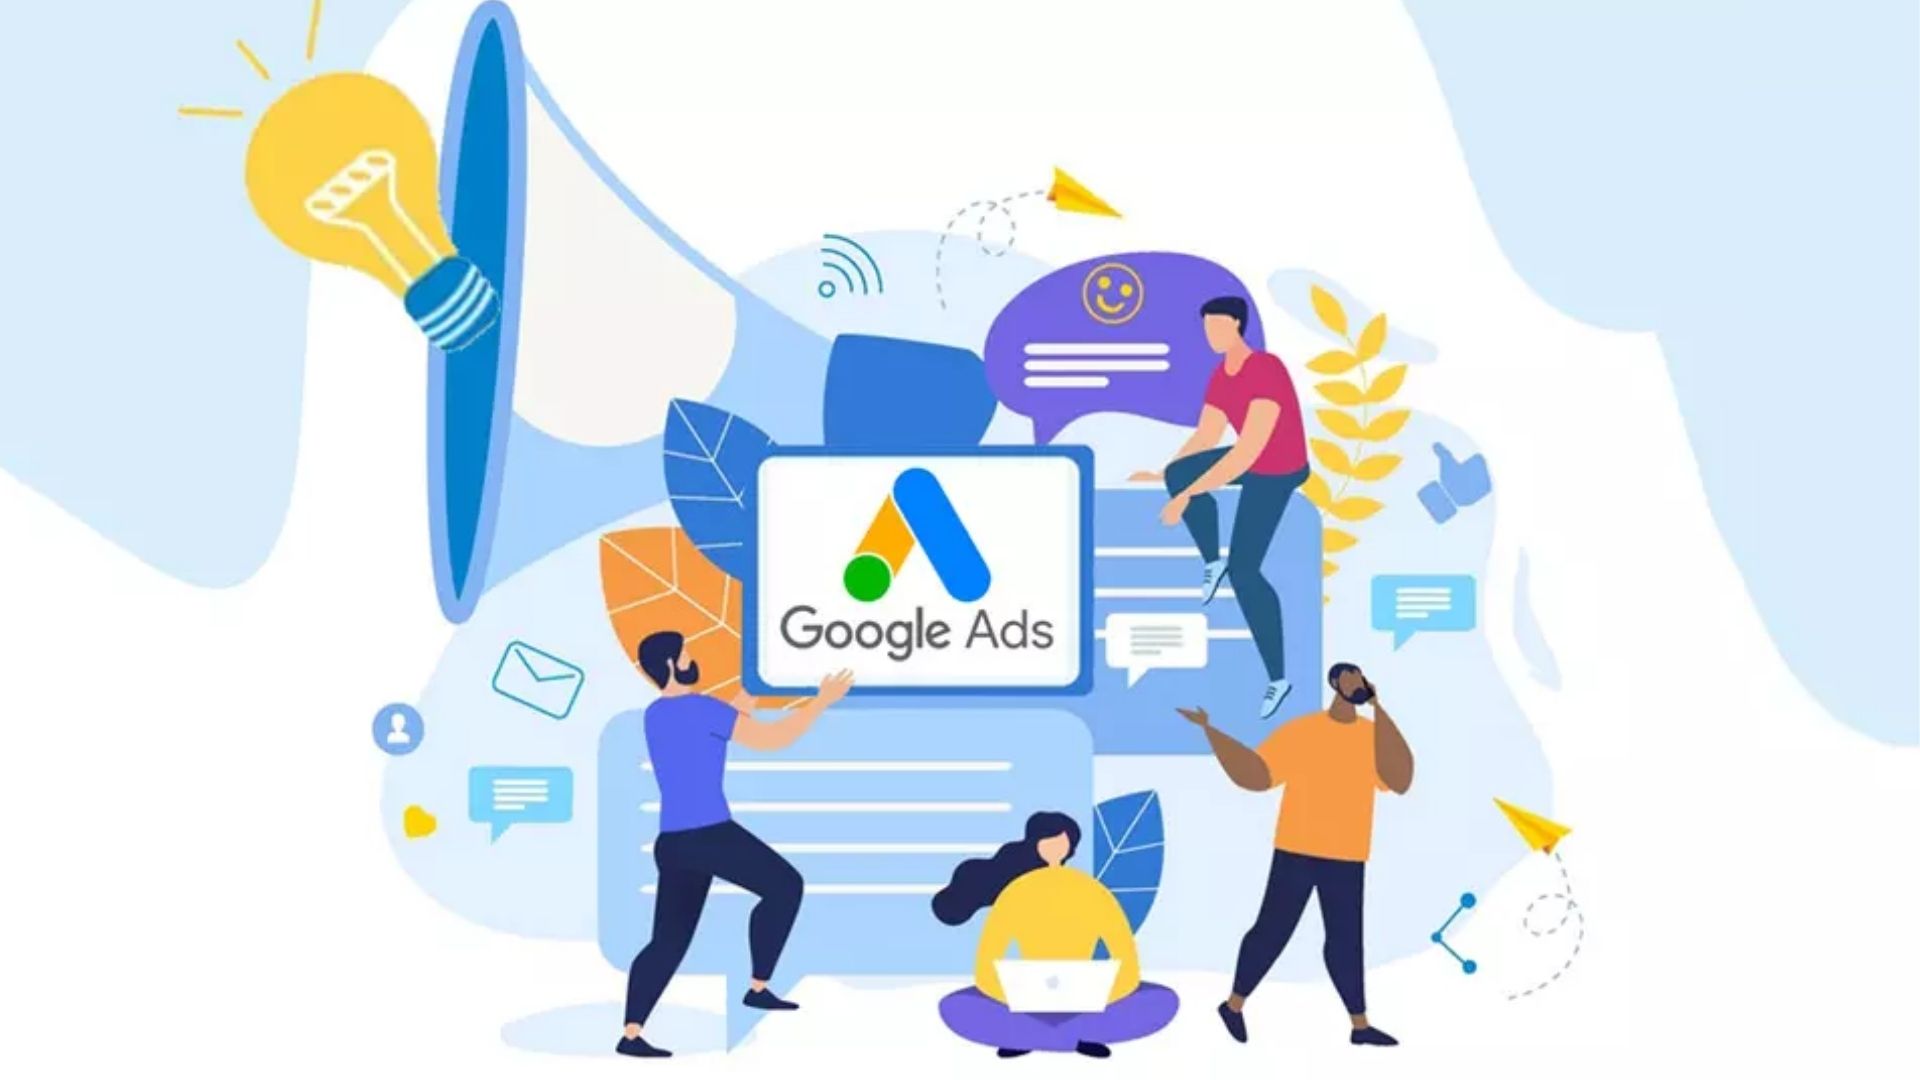 Google-ad-competitors-insights1